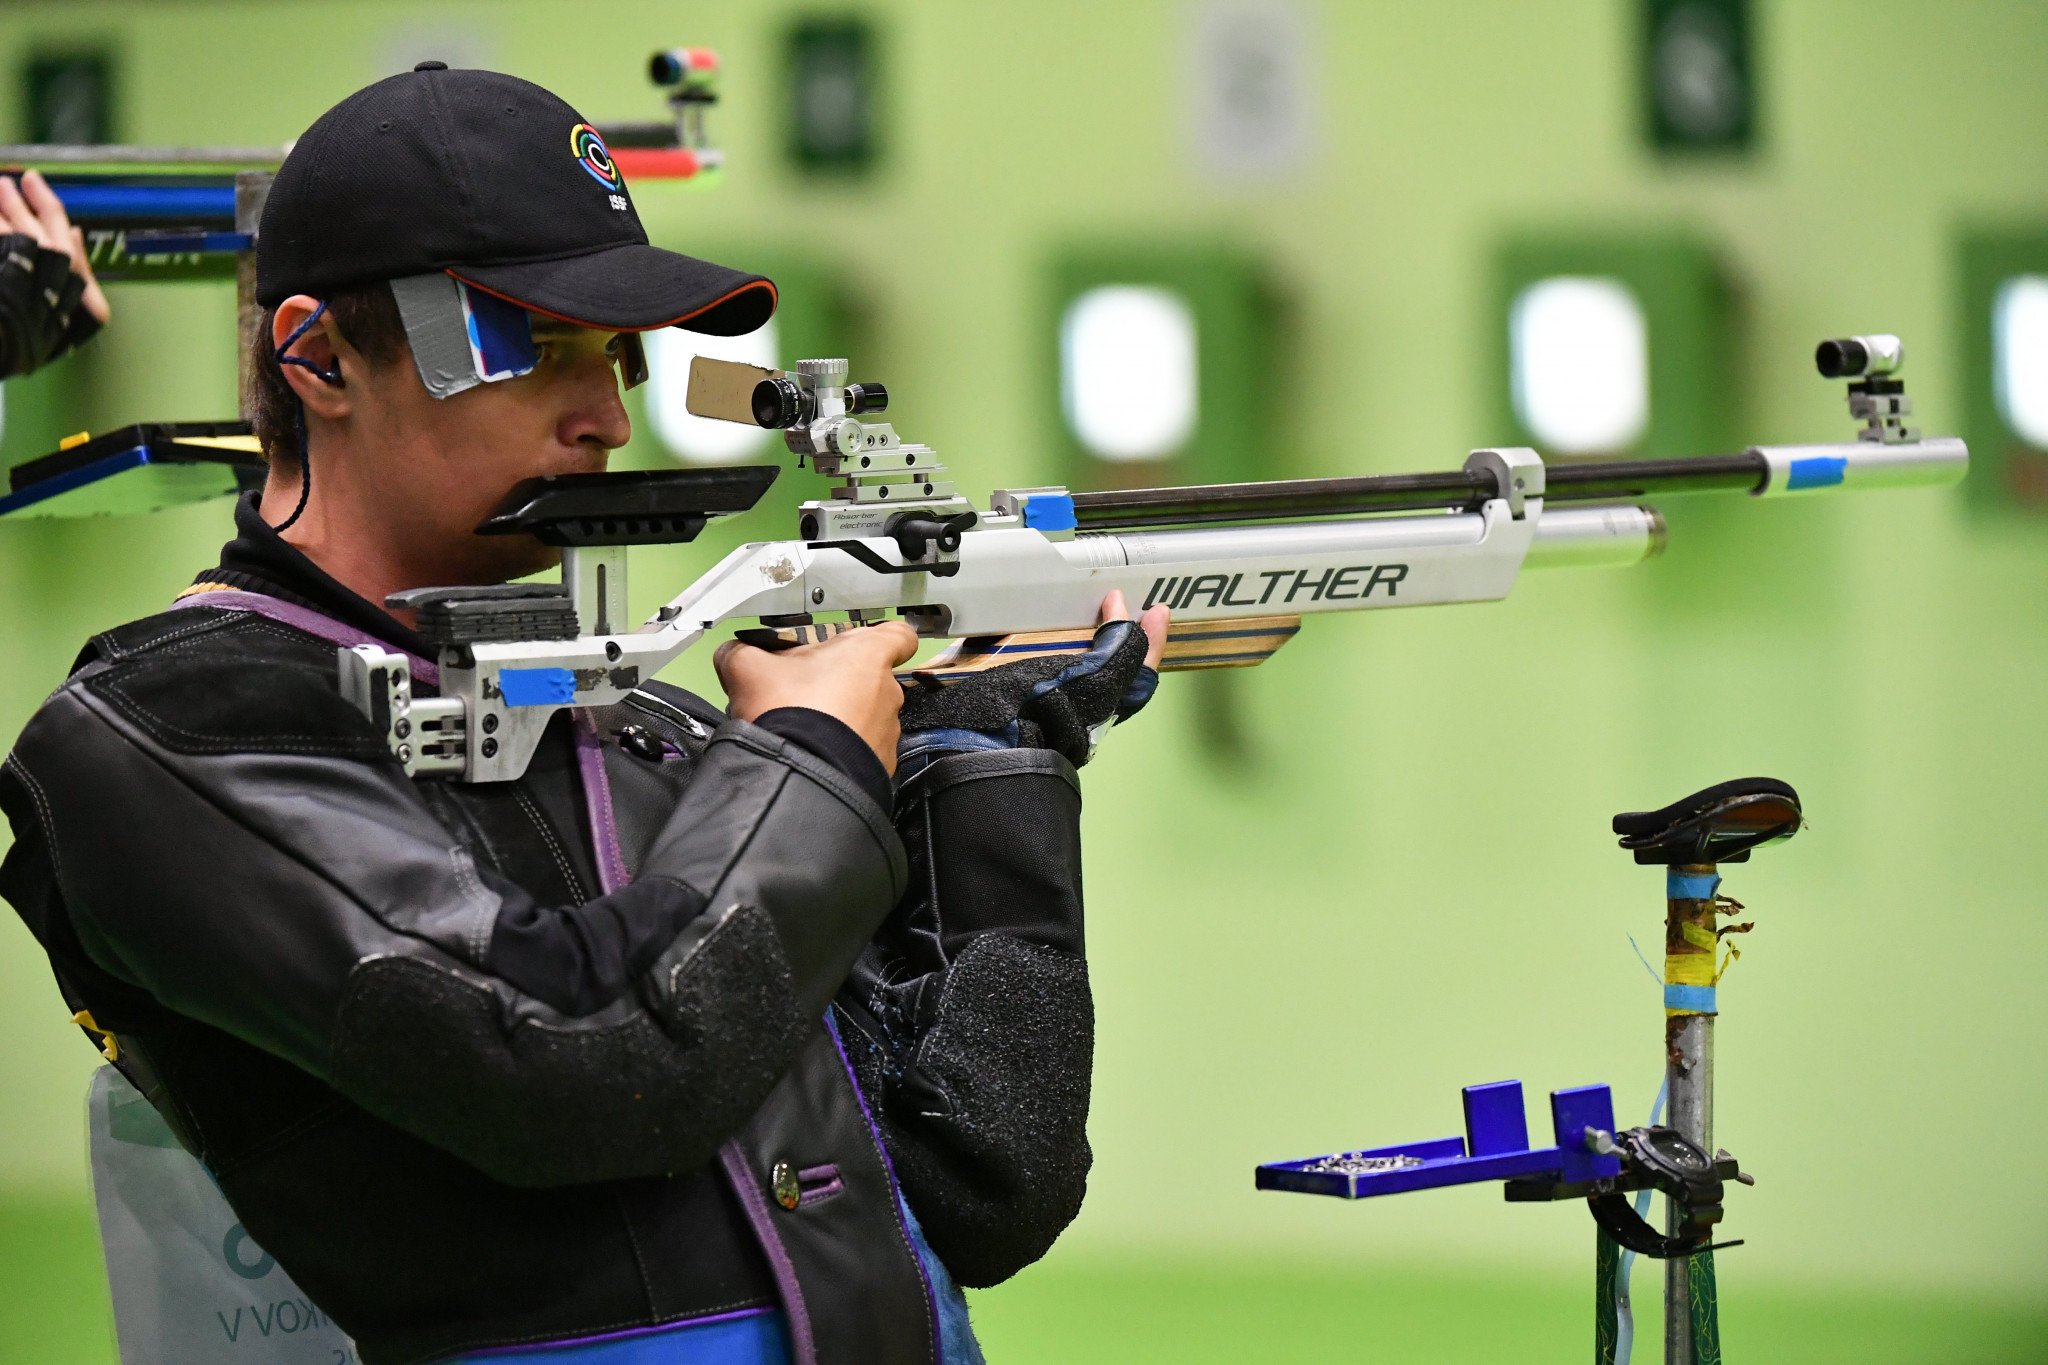 Maslennikov defends air rifle title at European Shooting Championships